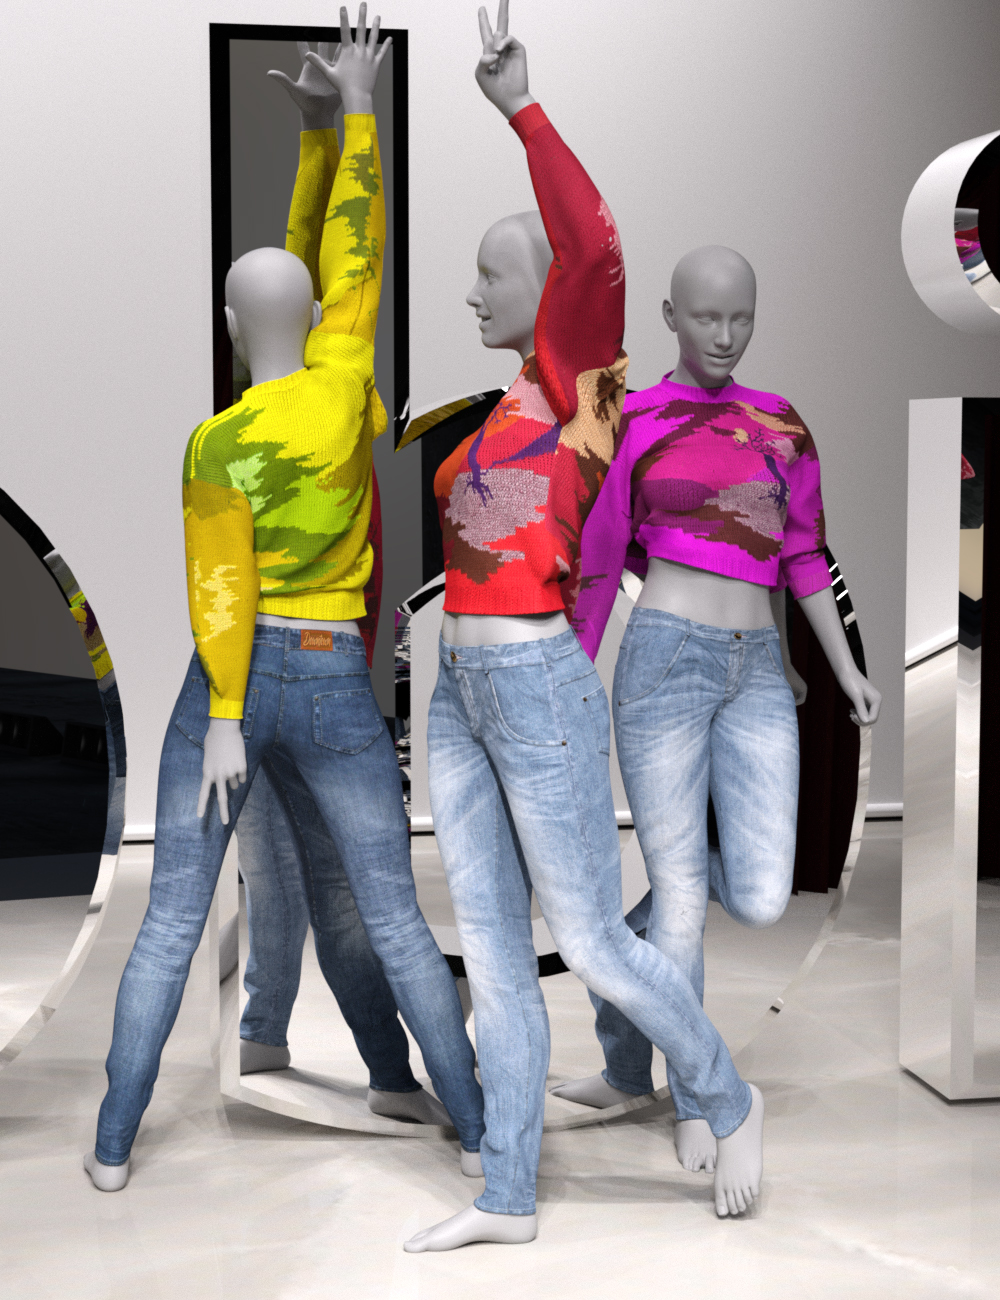 dForce Sweater Collection by: dobit, 3D Models by Daz 3D